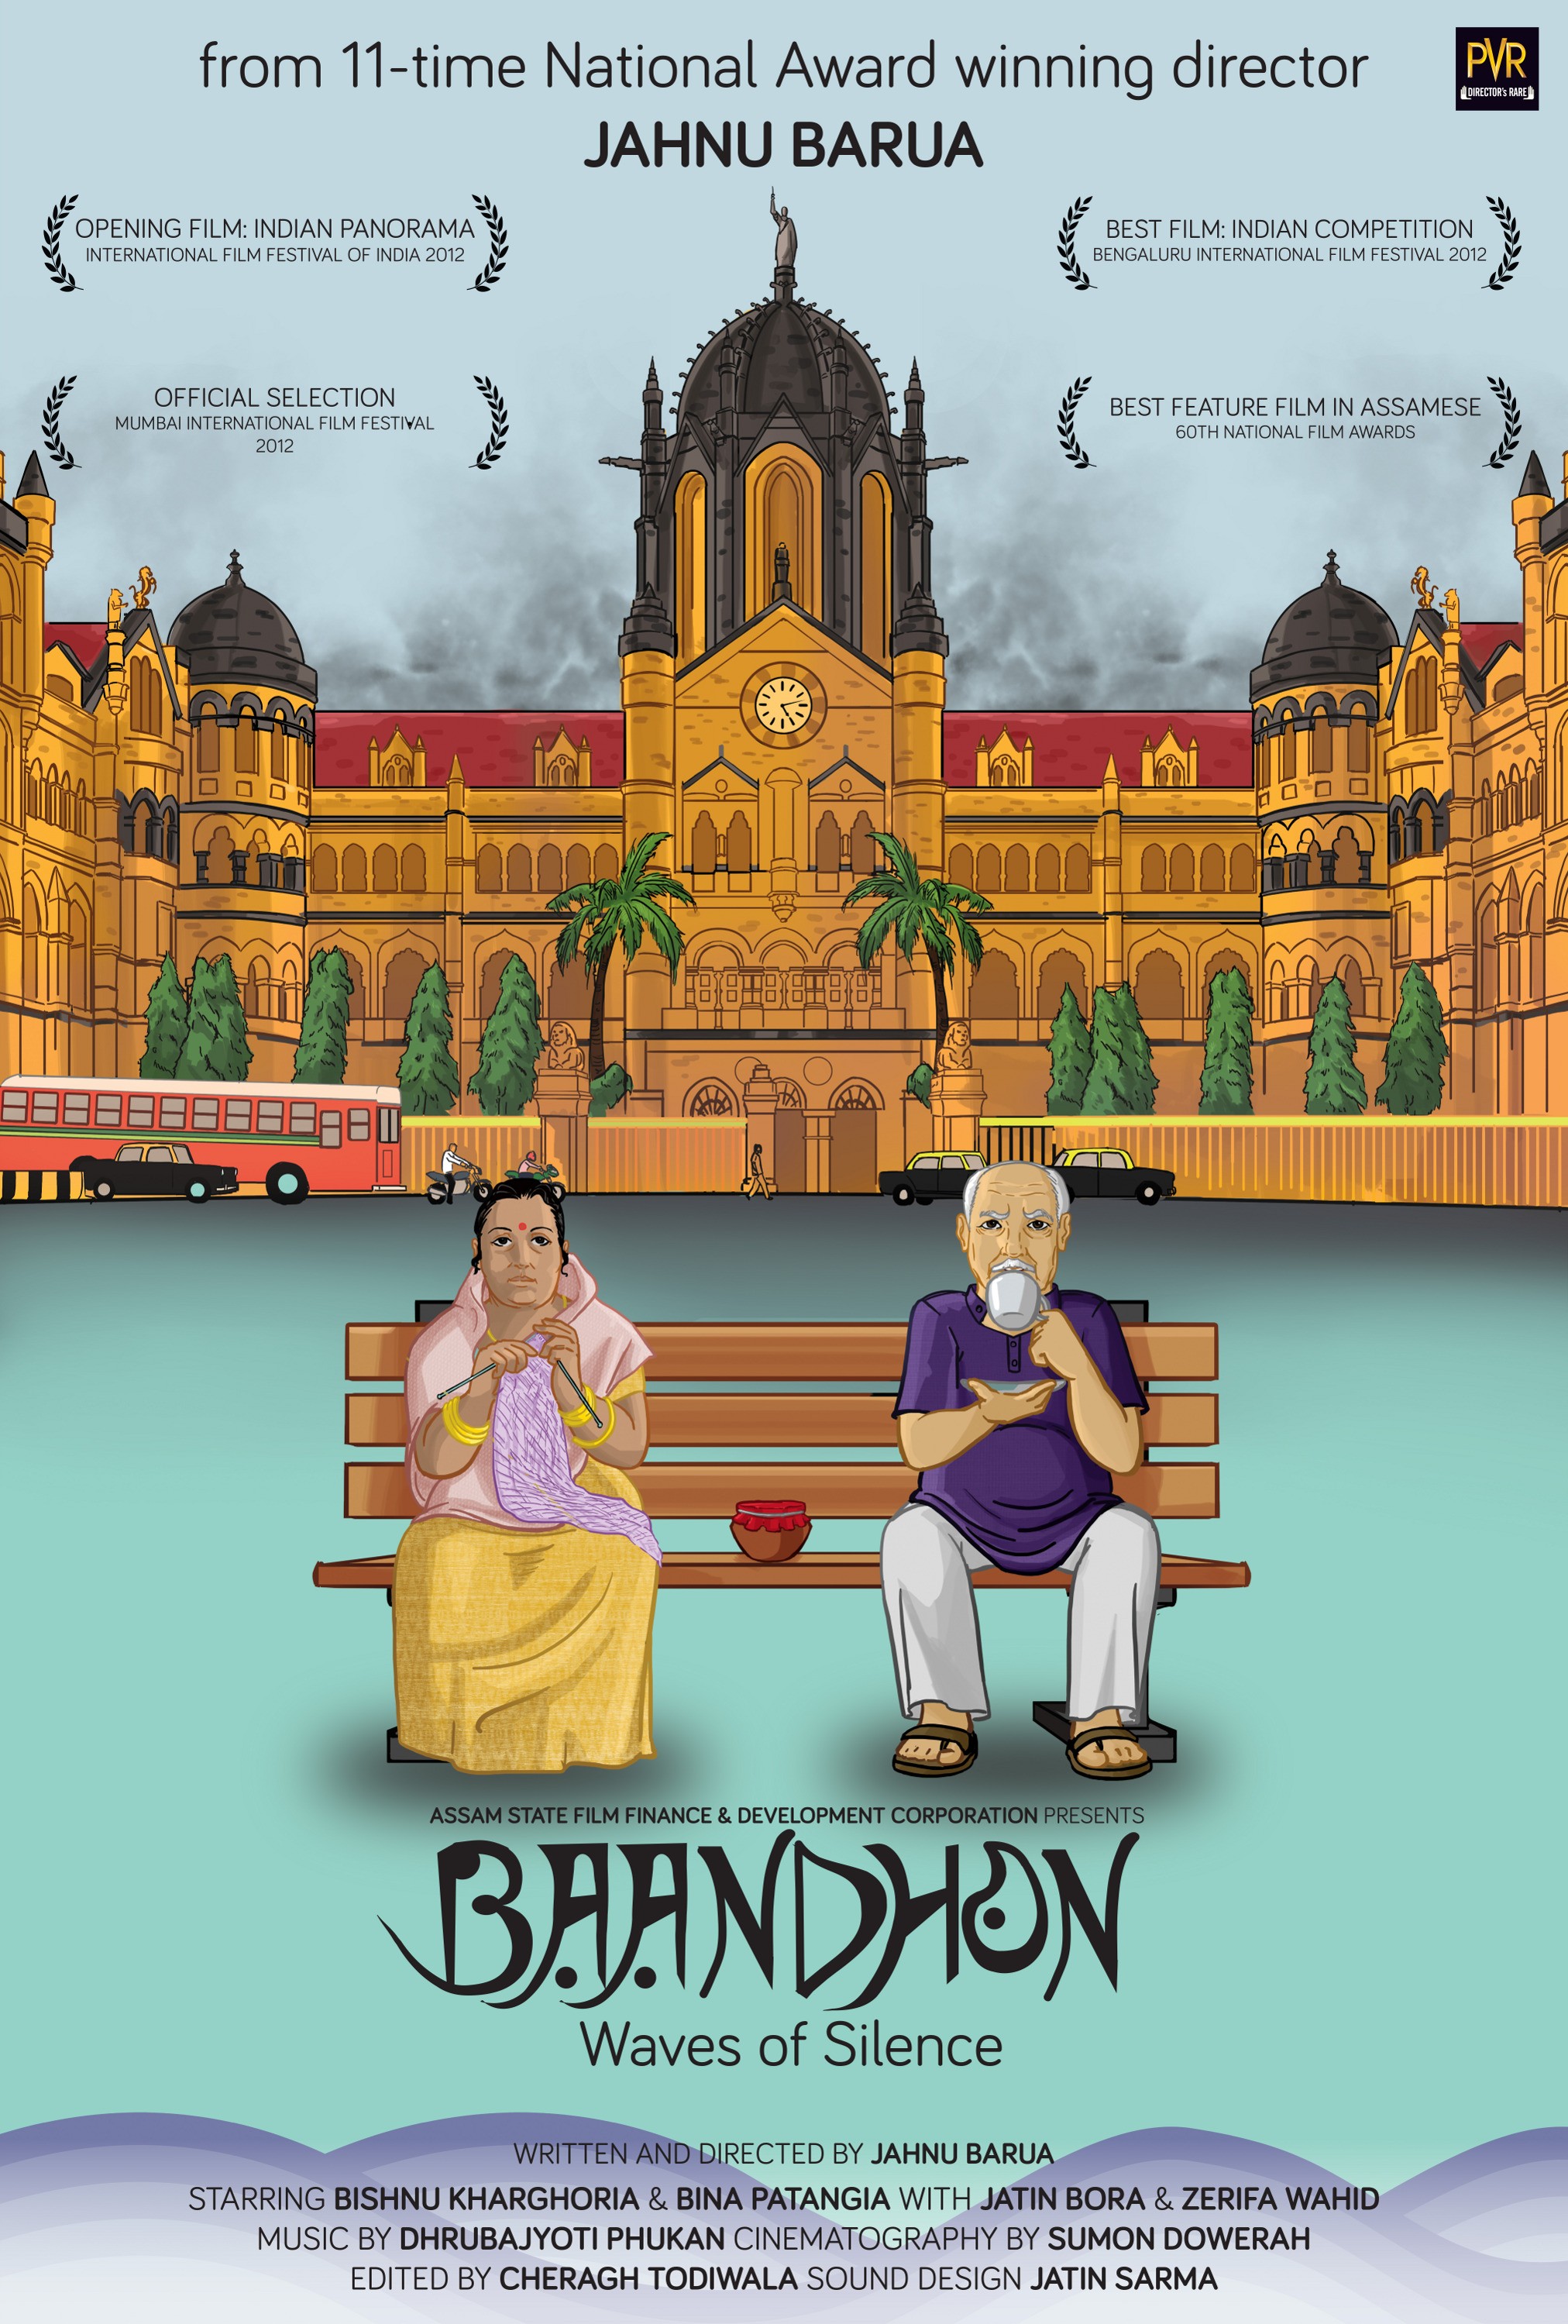 Mega Sized Movie Poster Image for Baandhon 